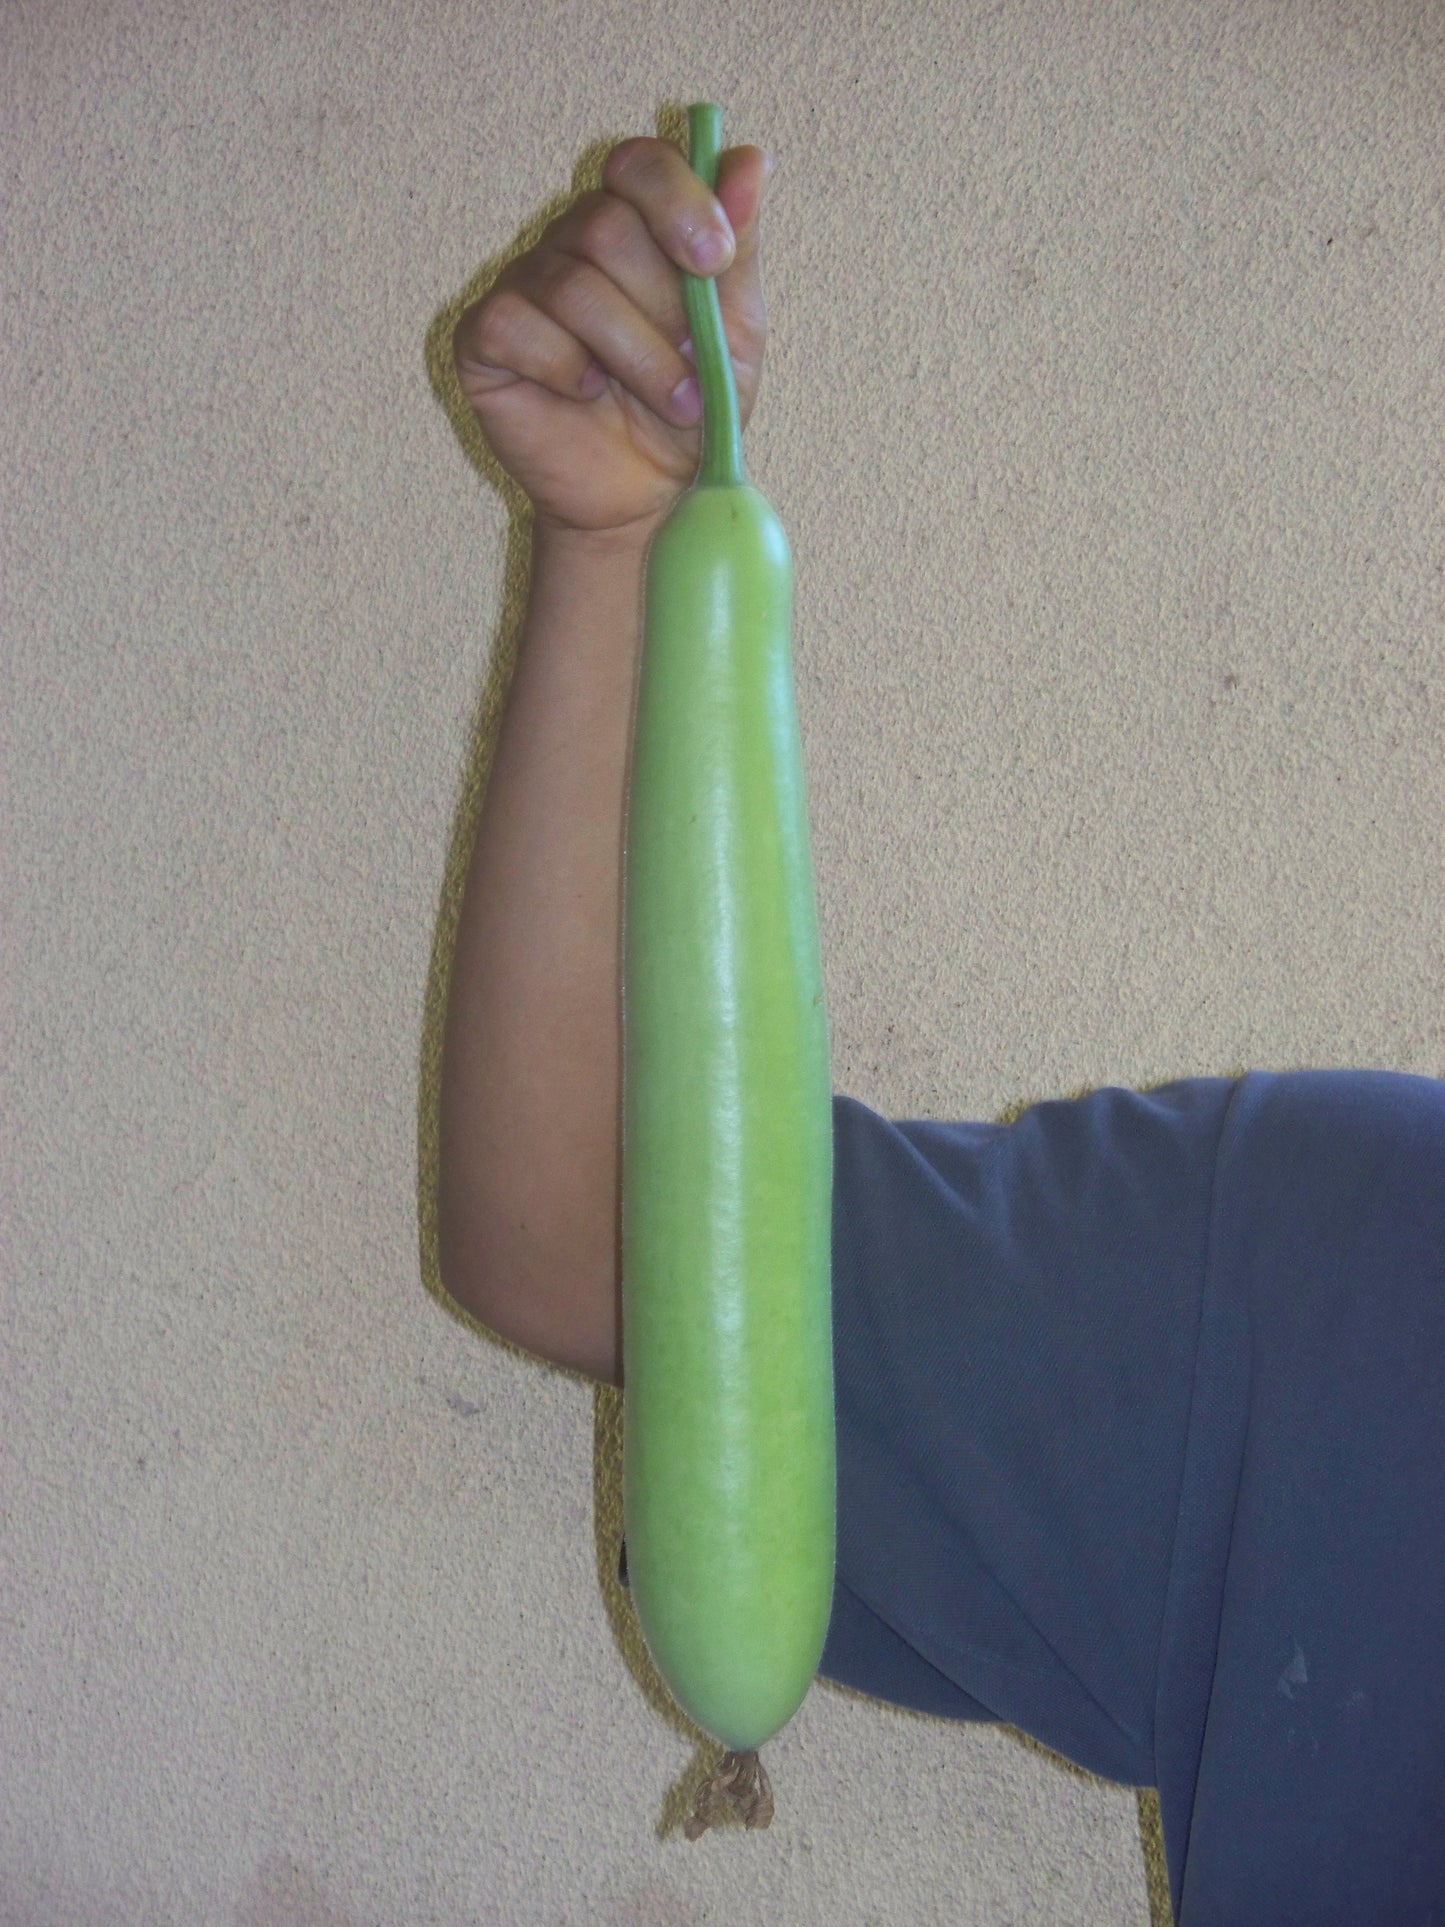 Opo Long Squash India Lauki Long bottle gourd Non GMO Open Pollinated Seeds